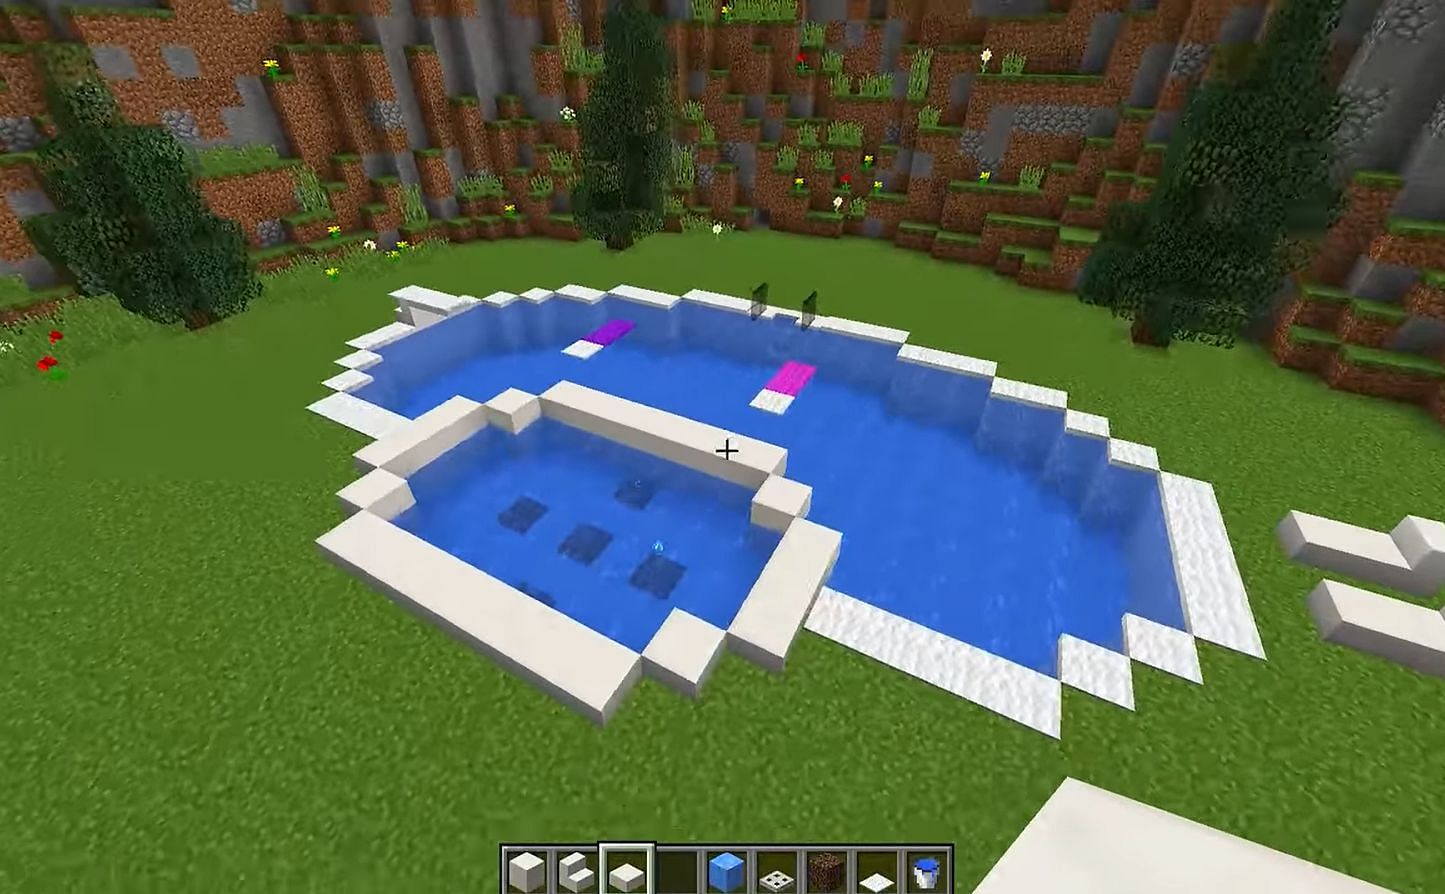 Swimming pool with hot tub (Image via YouTube Biggs87x)